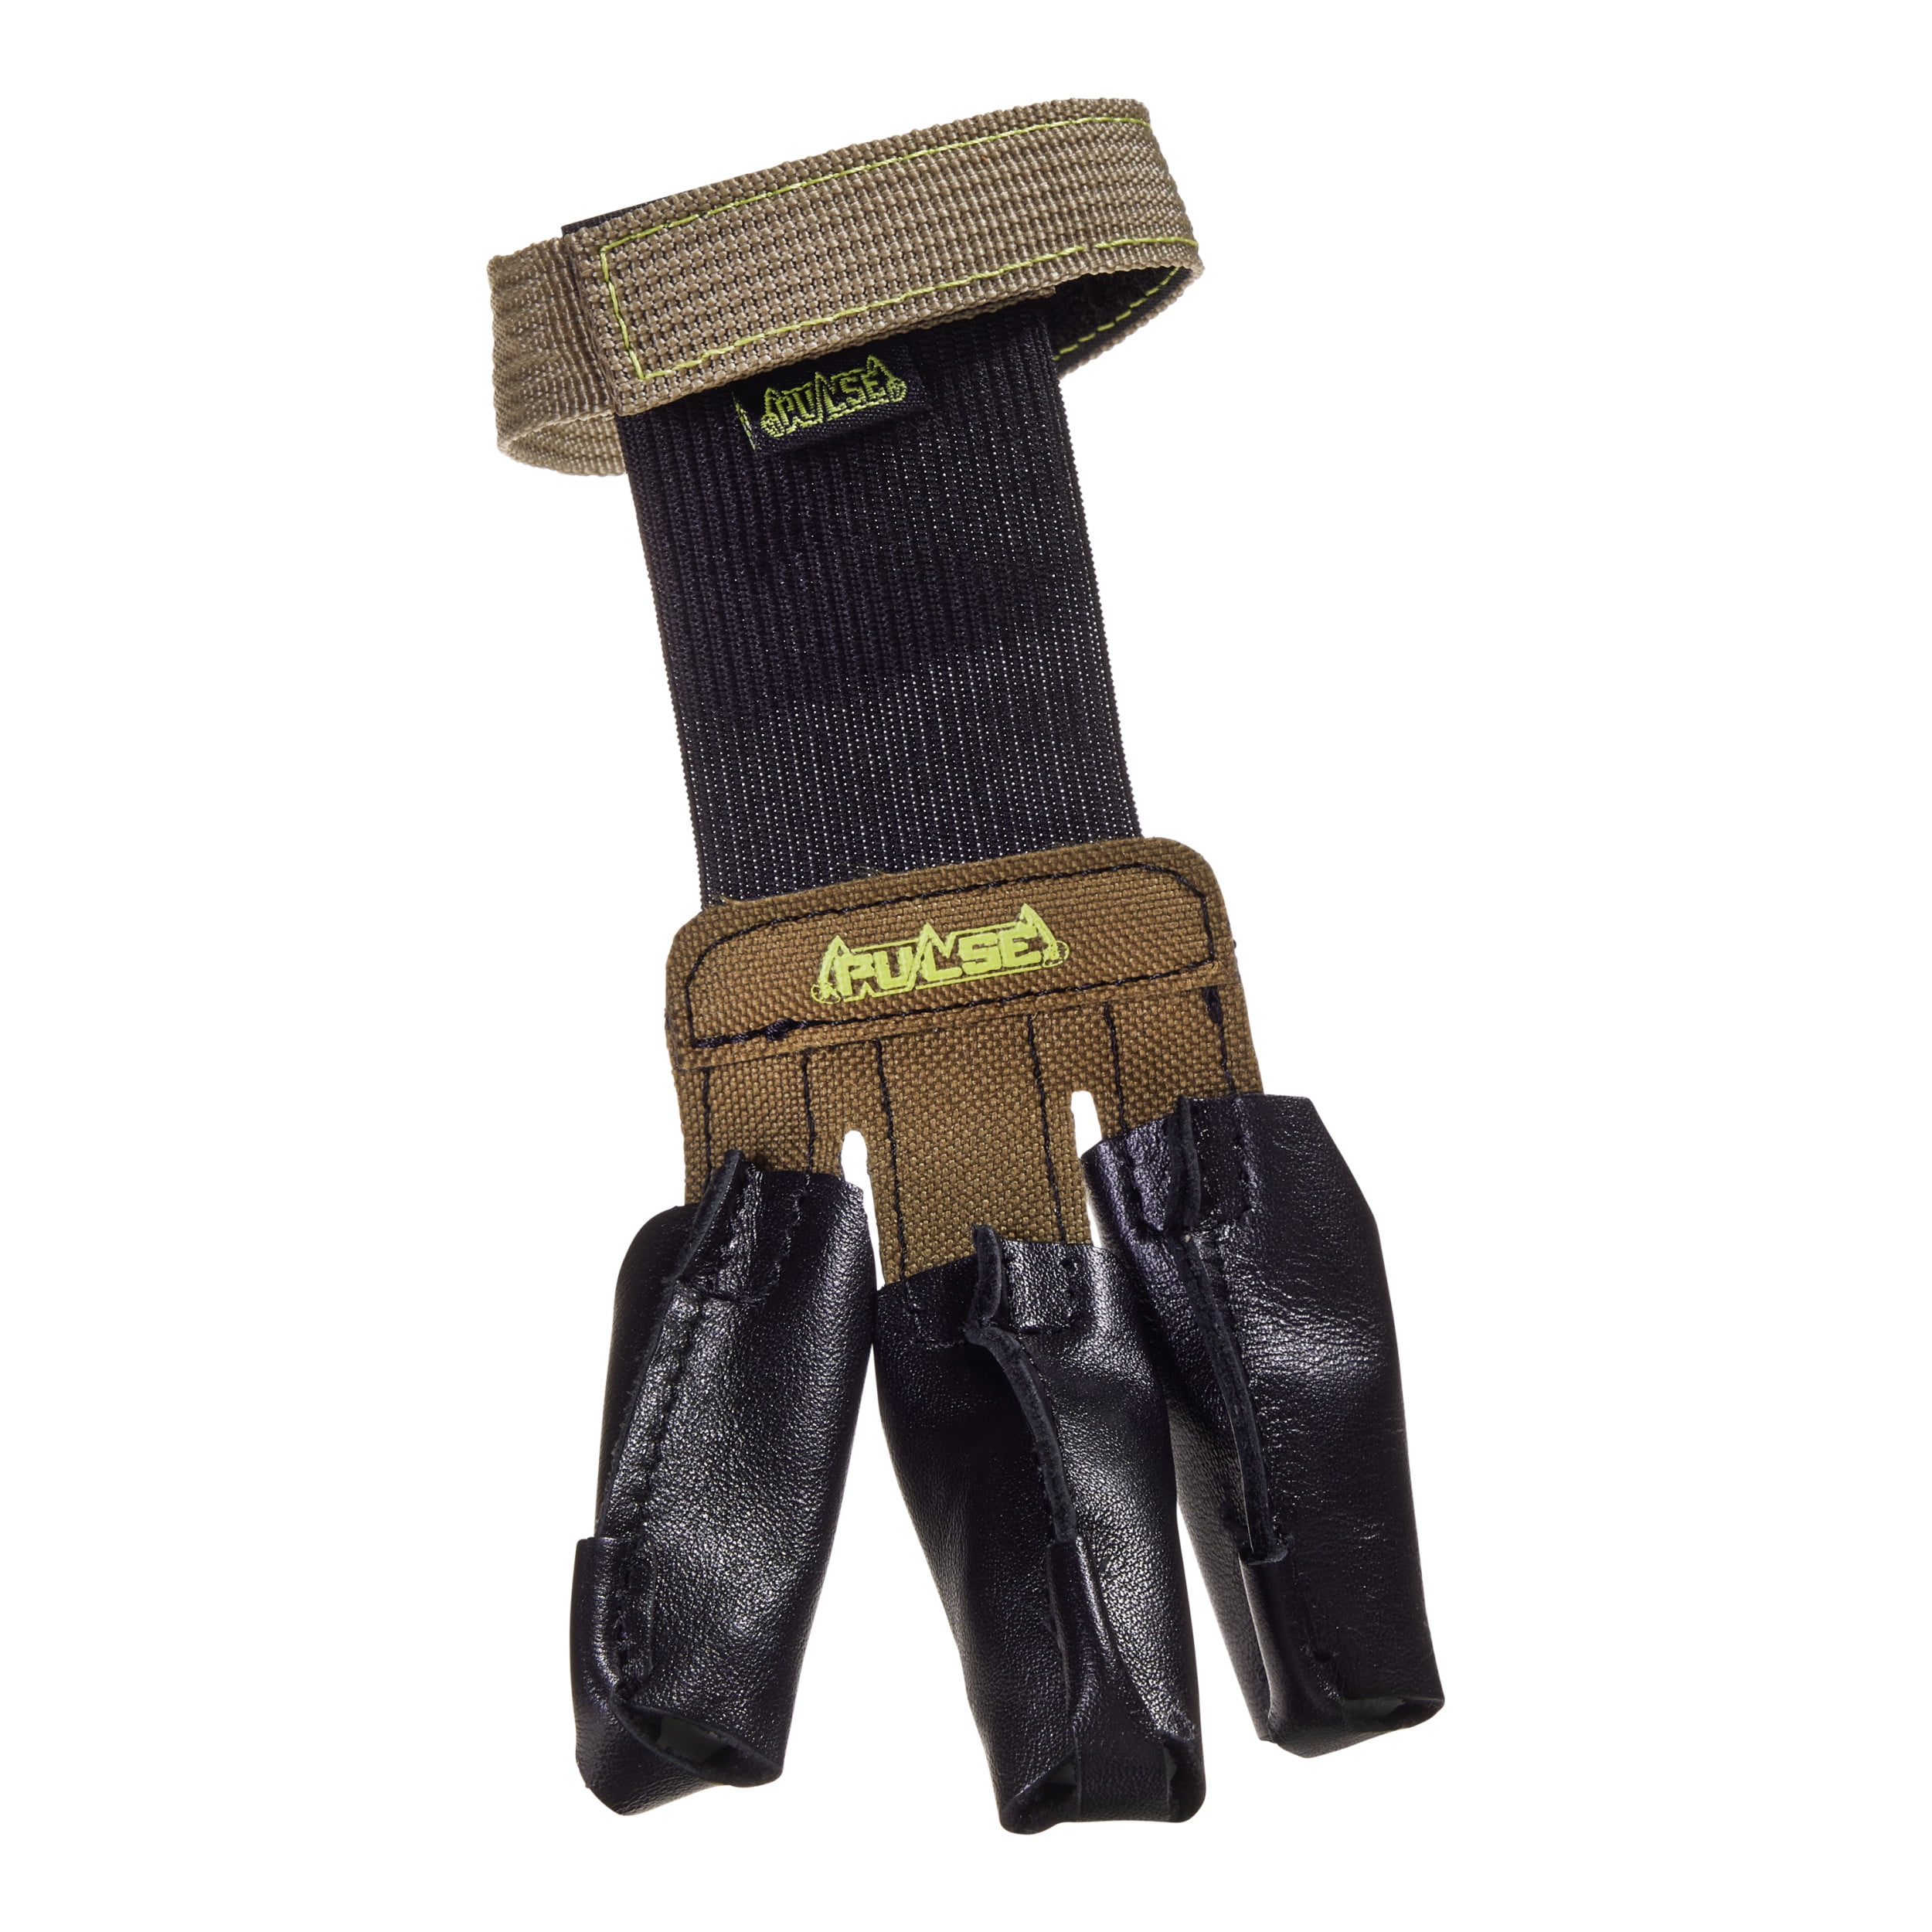 Allen Cases Adjustable Mossy Oak Break-Up Super Comfort Archery Glove Size M-L 